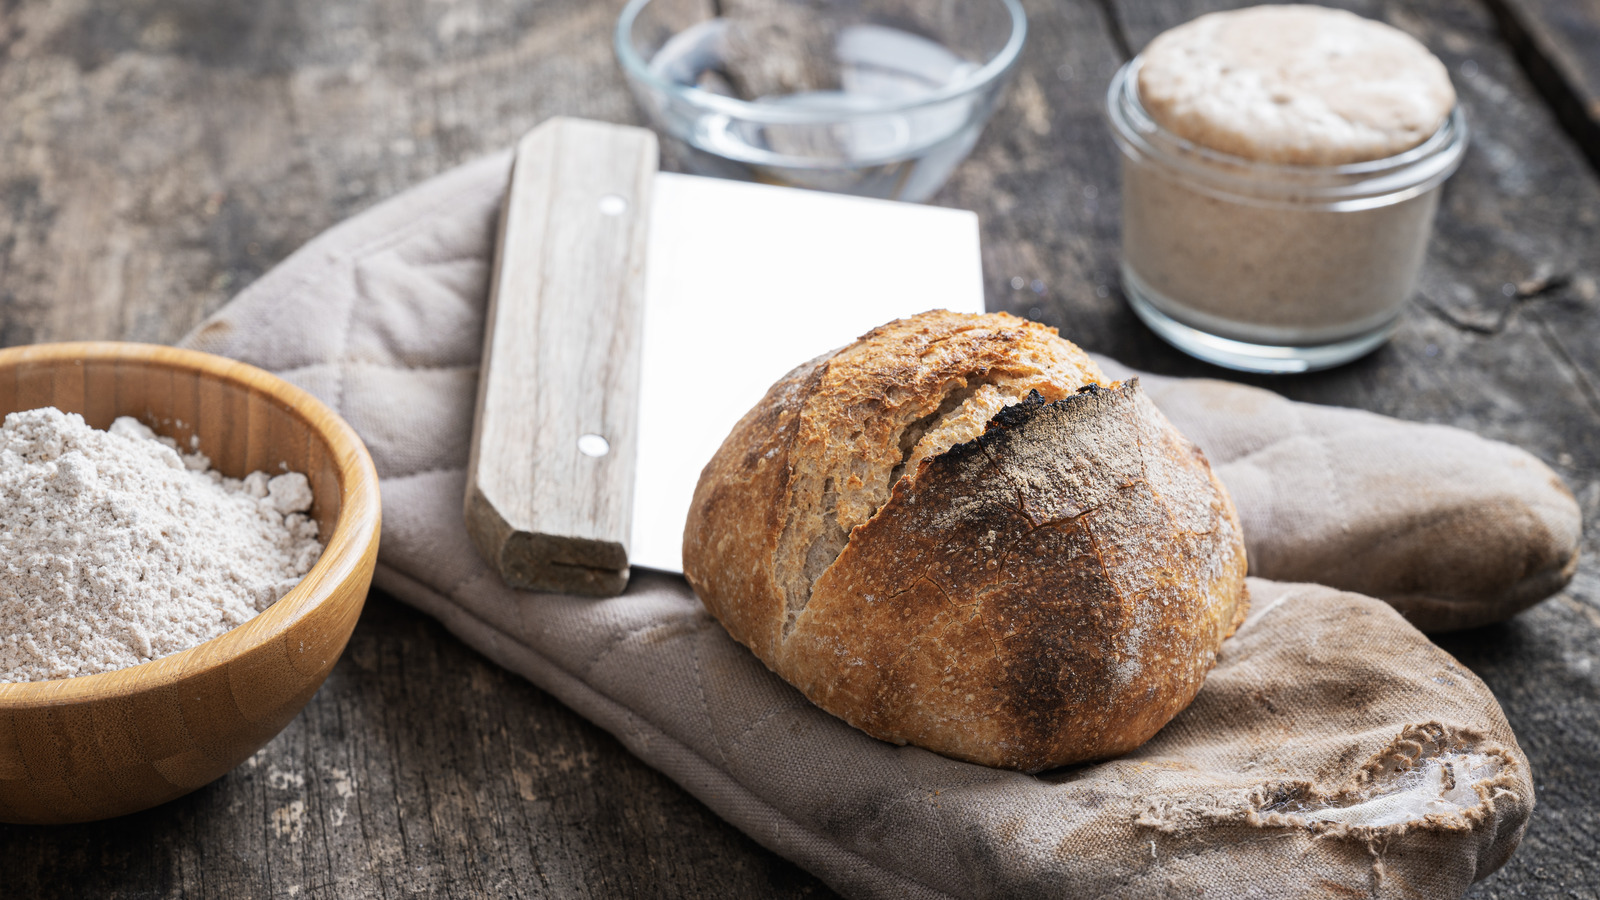 What it means when sourdough bread is “ripe”